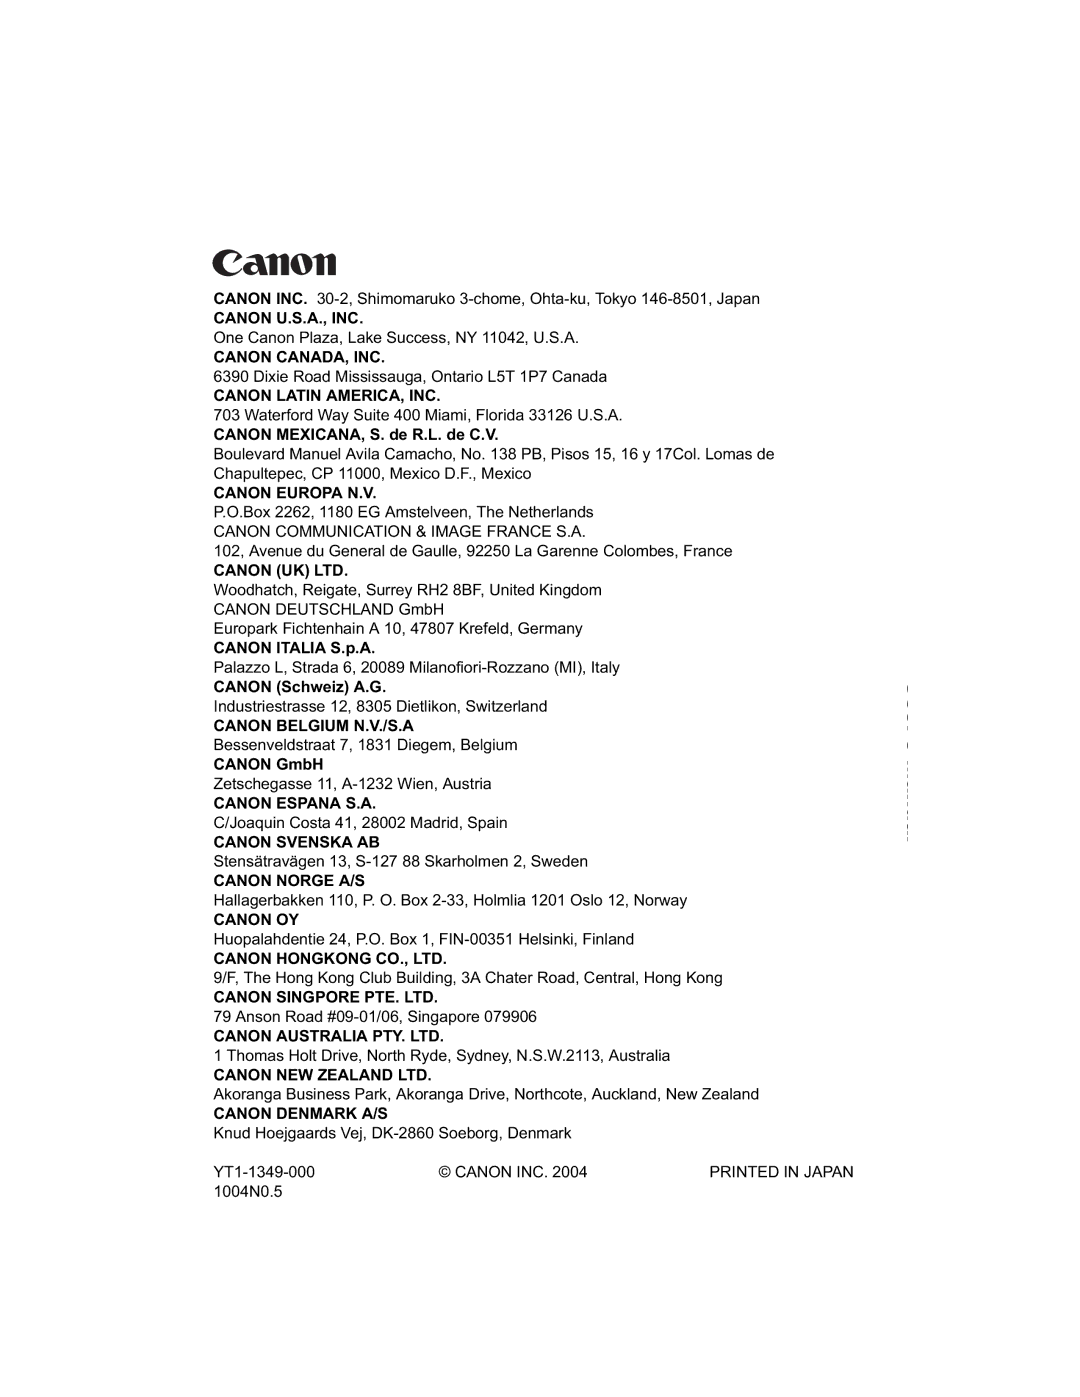 Canon SX20 manual Canon U.S.A., INC 